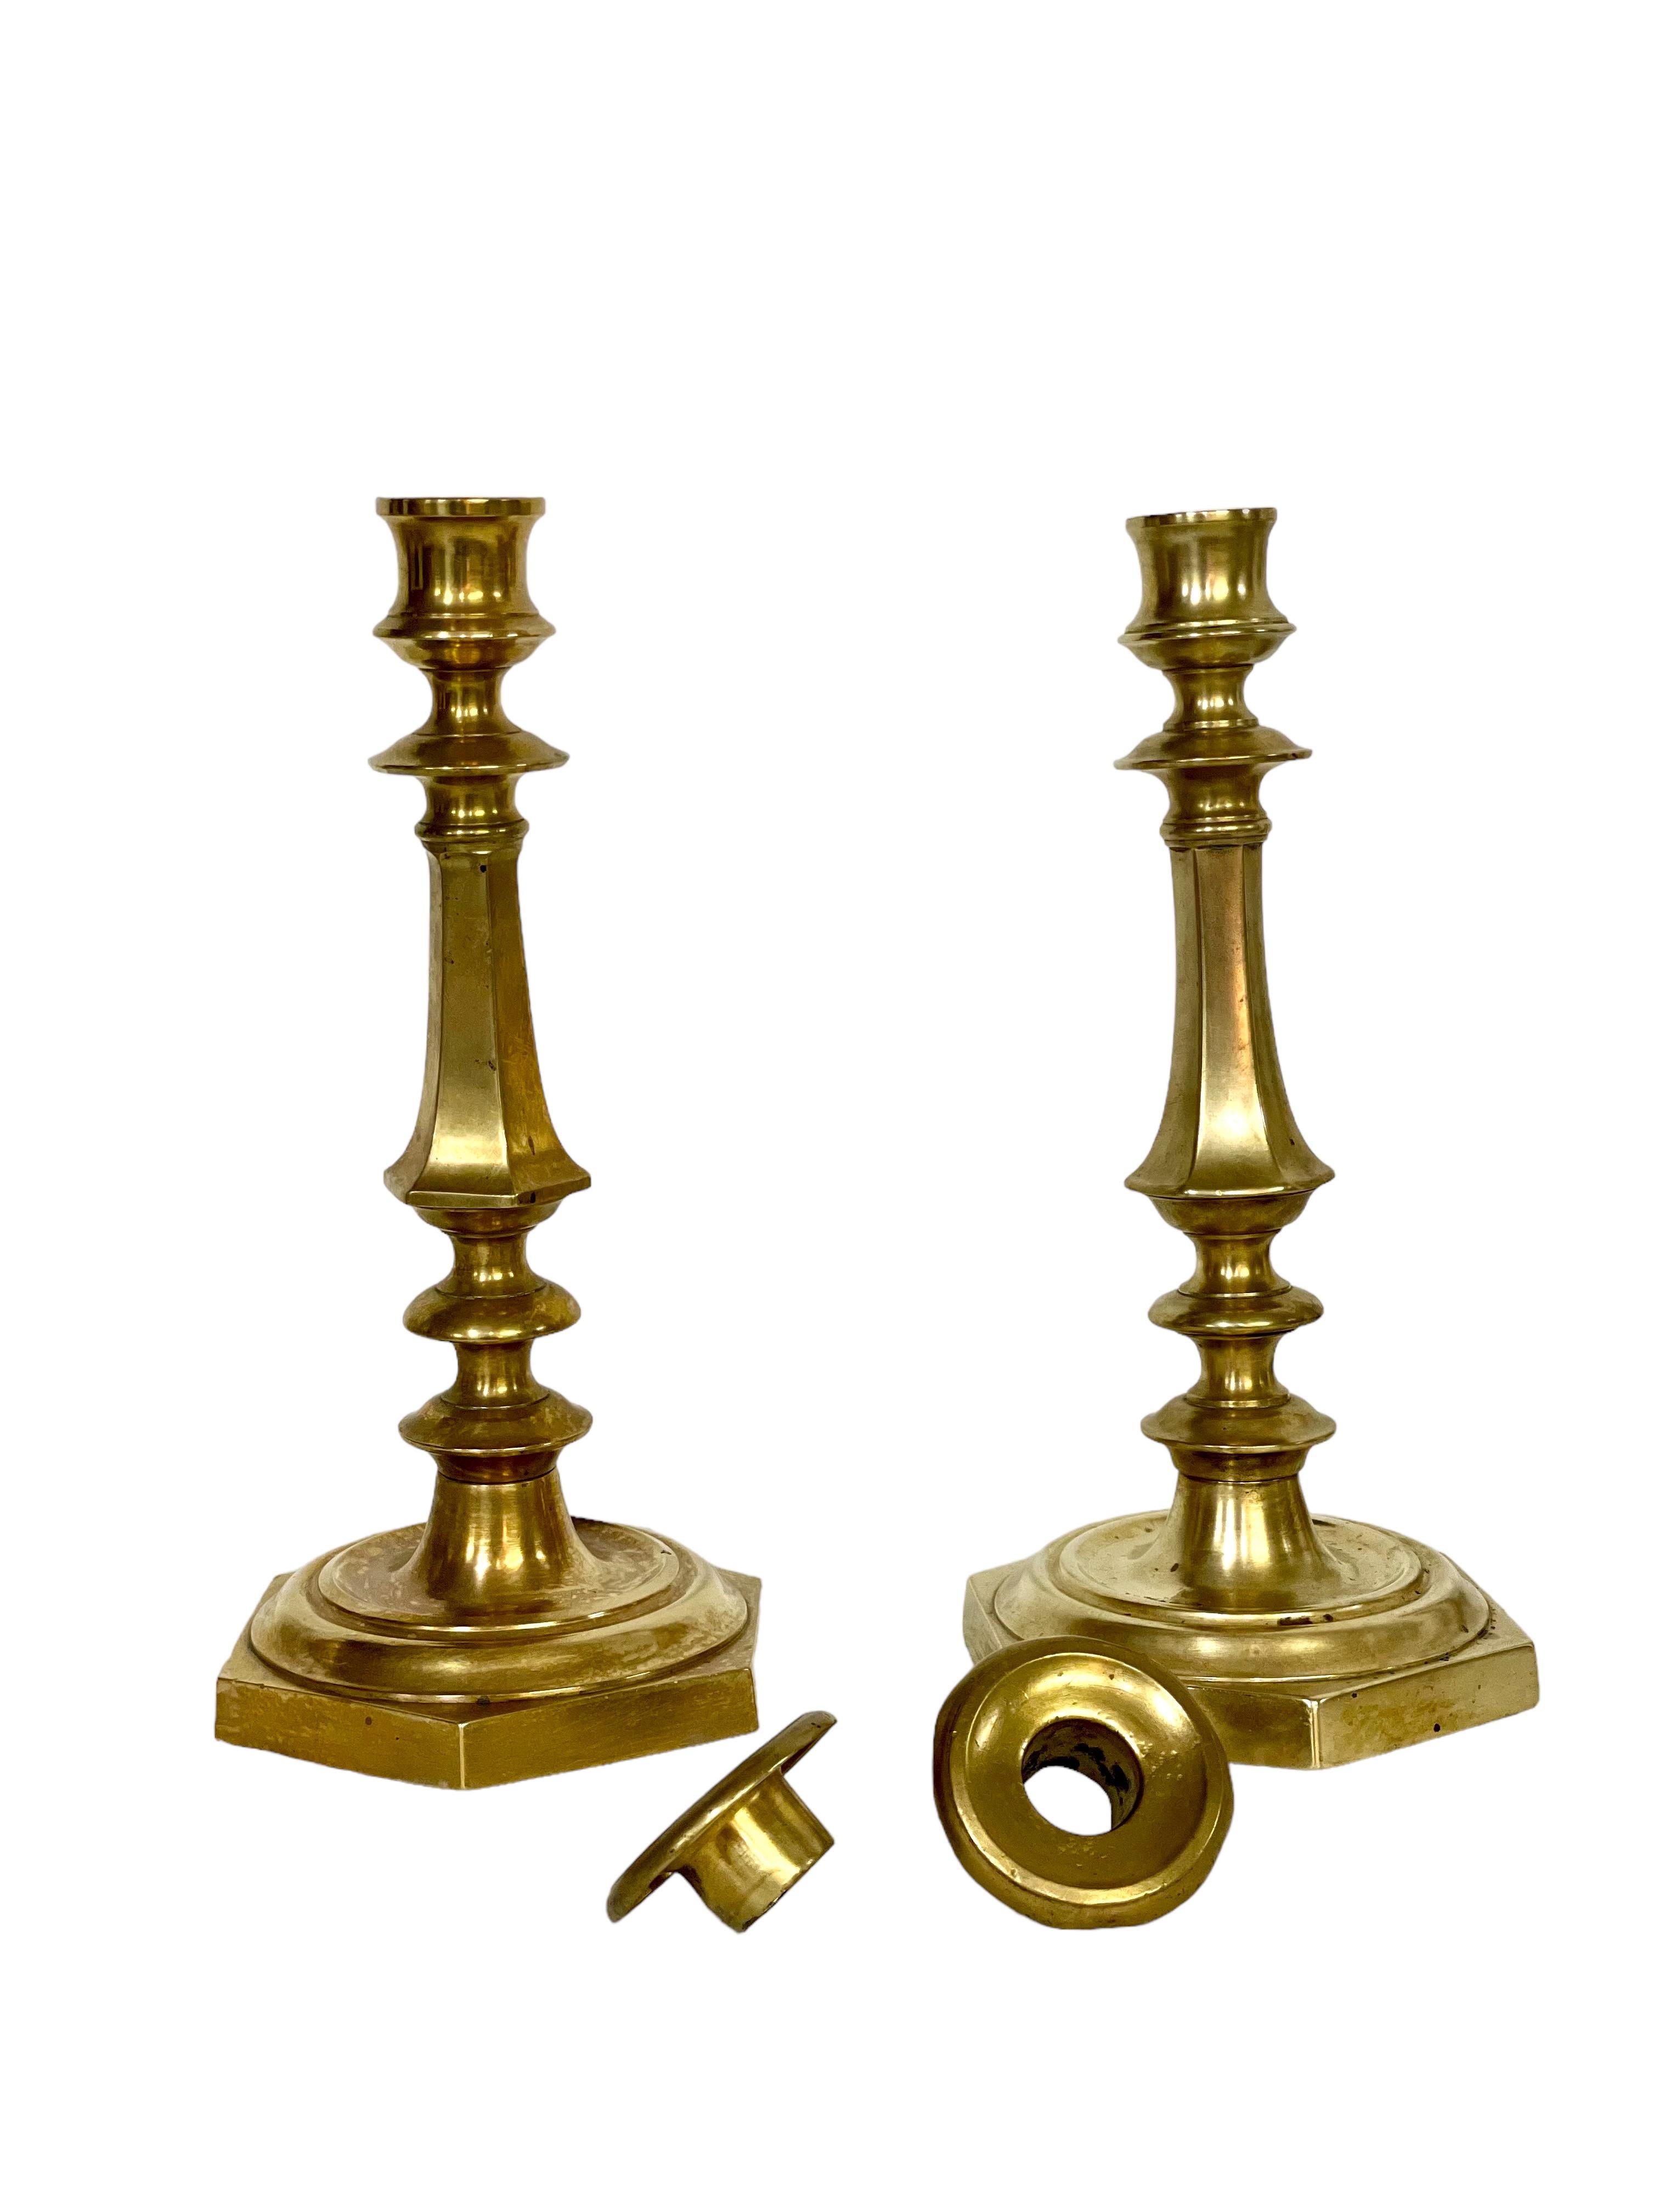 Regency 19th Century Pair of Gilt Bronze Baluster Candlesticks For Sale